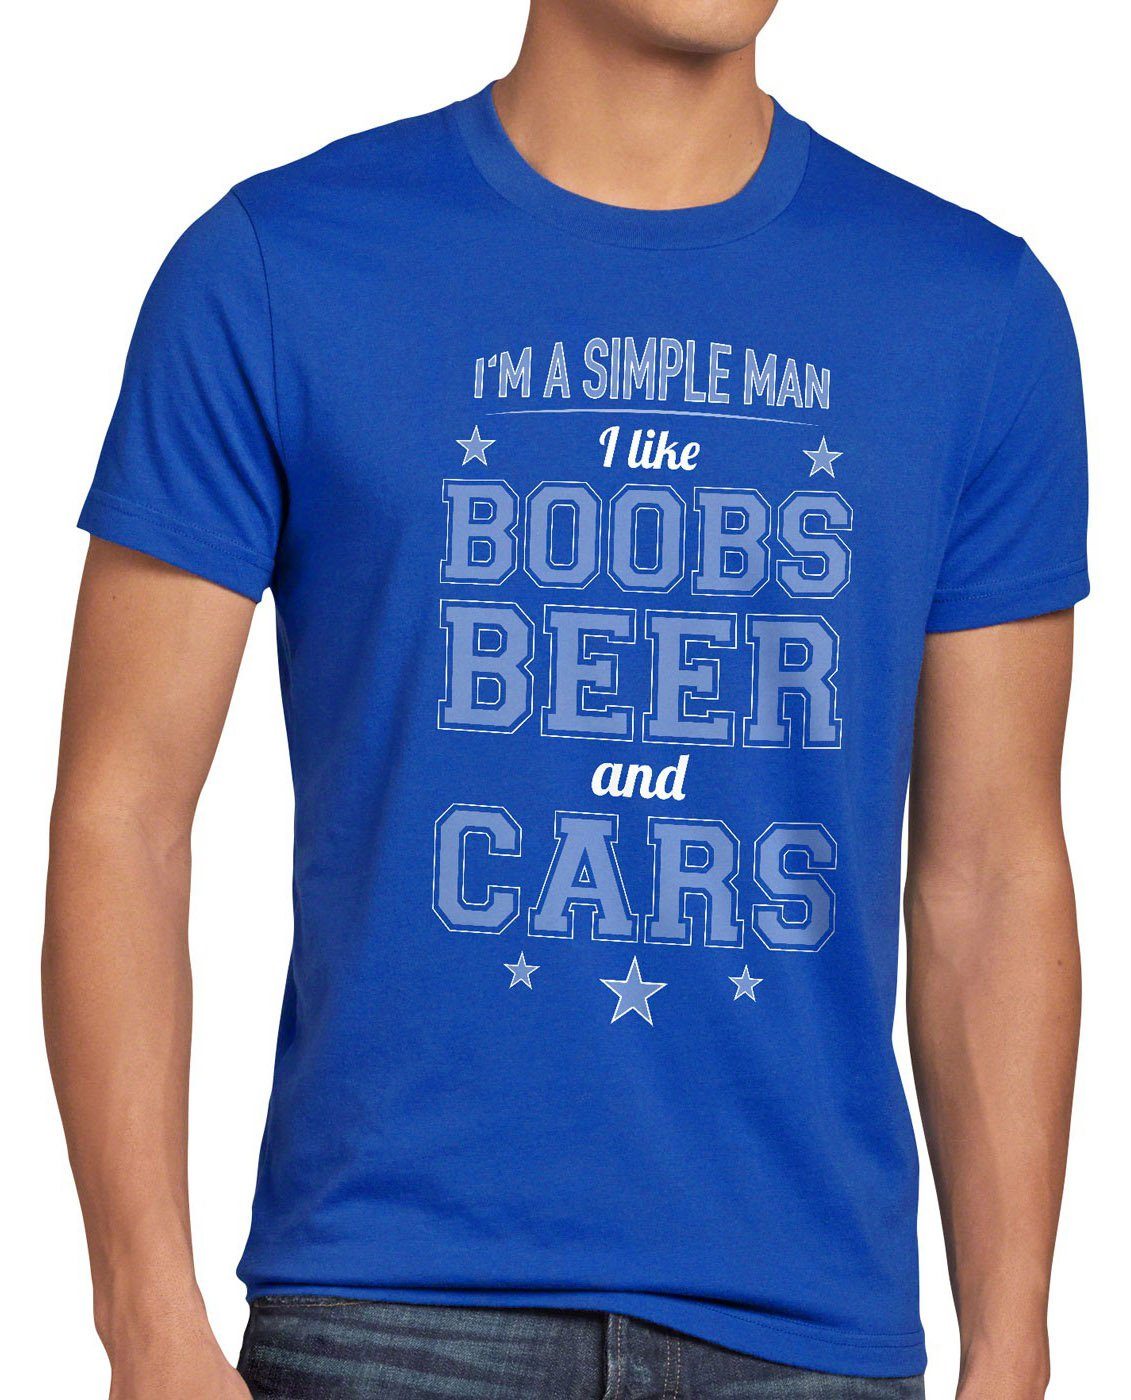 Man bier Simple tuning beer boobs titten auto funshirt style3 Print-Shirt Herren T-Shirt blau car spruch